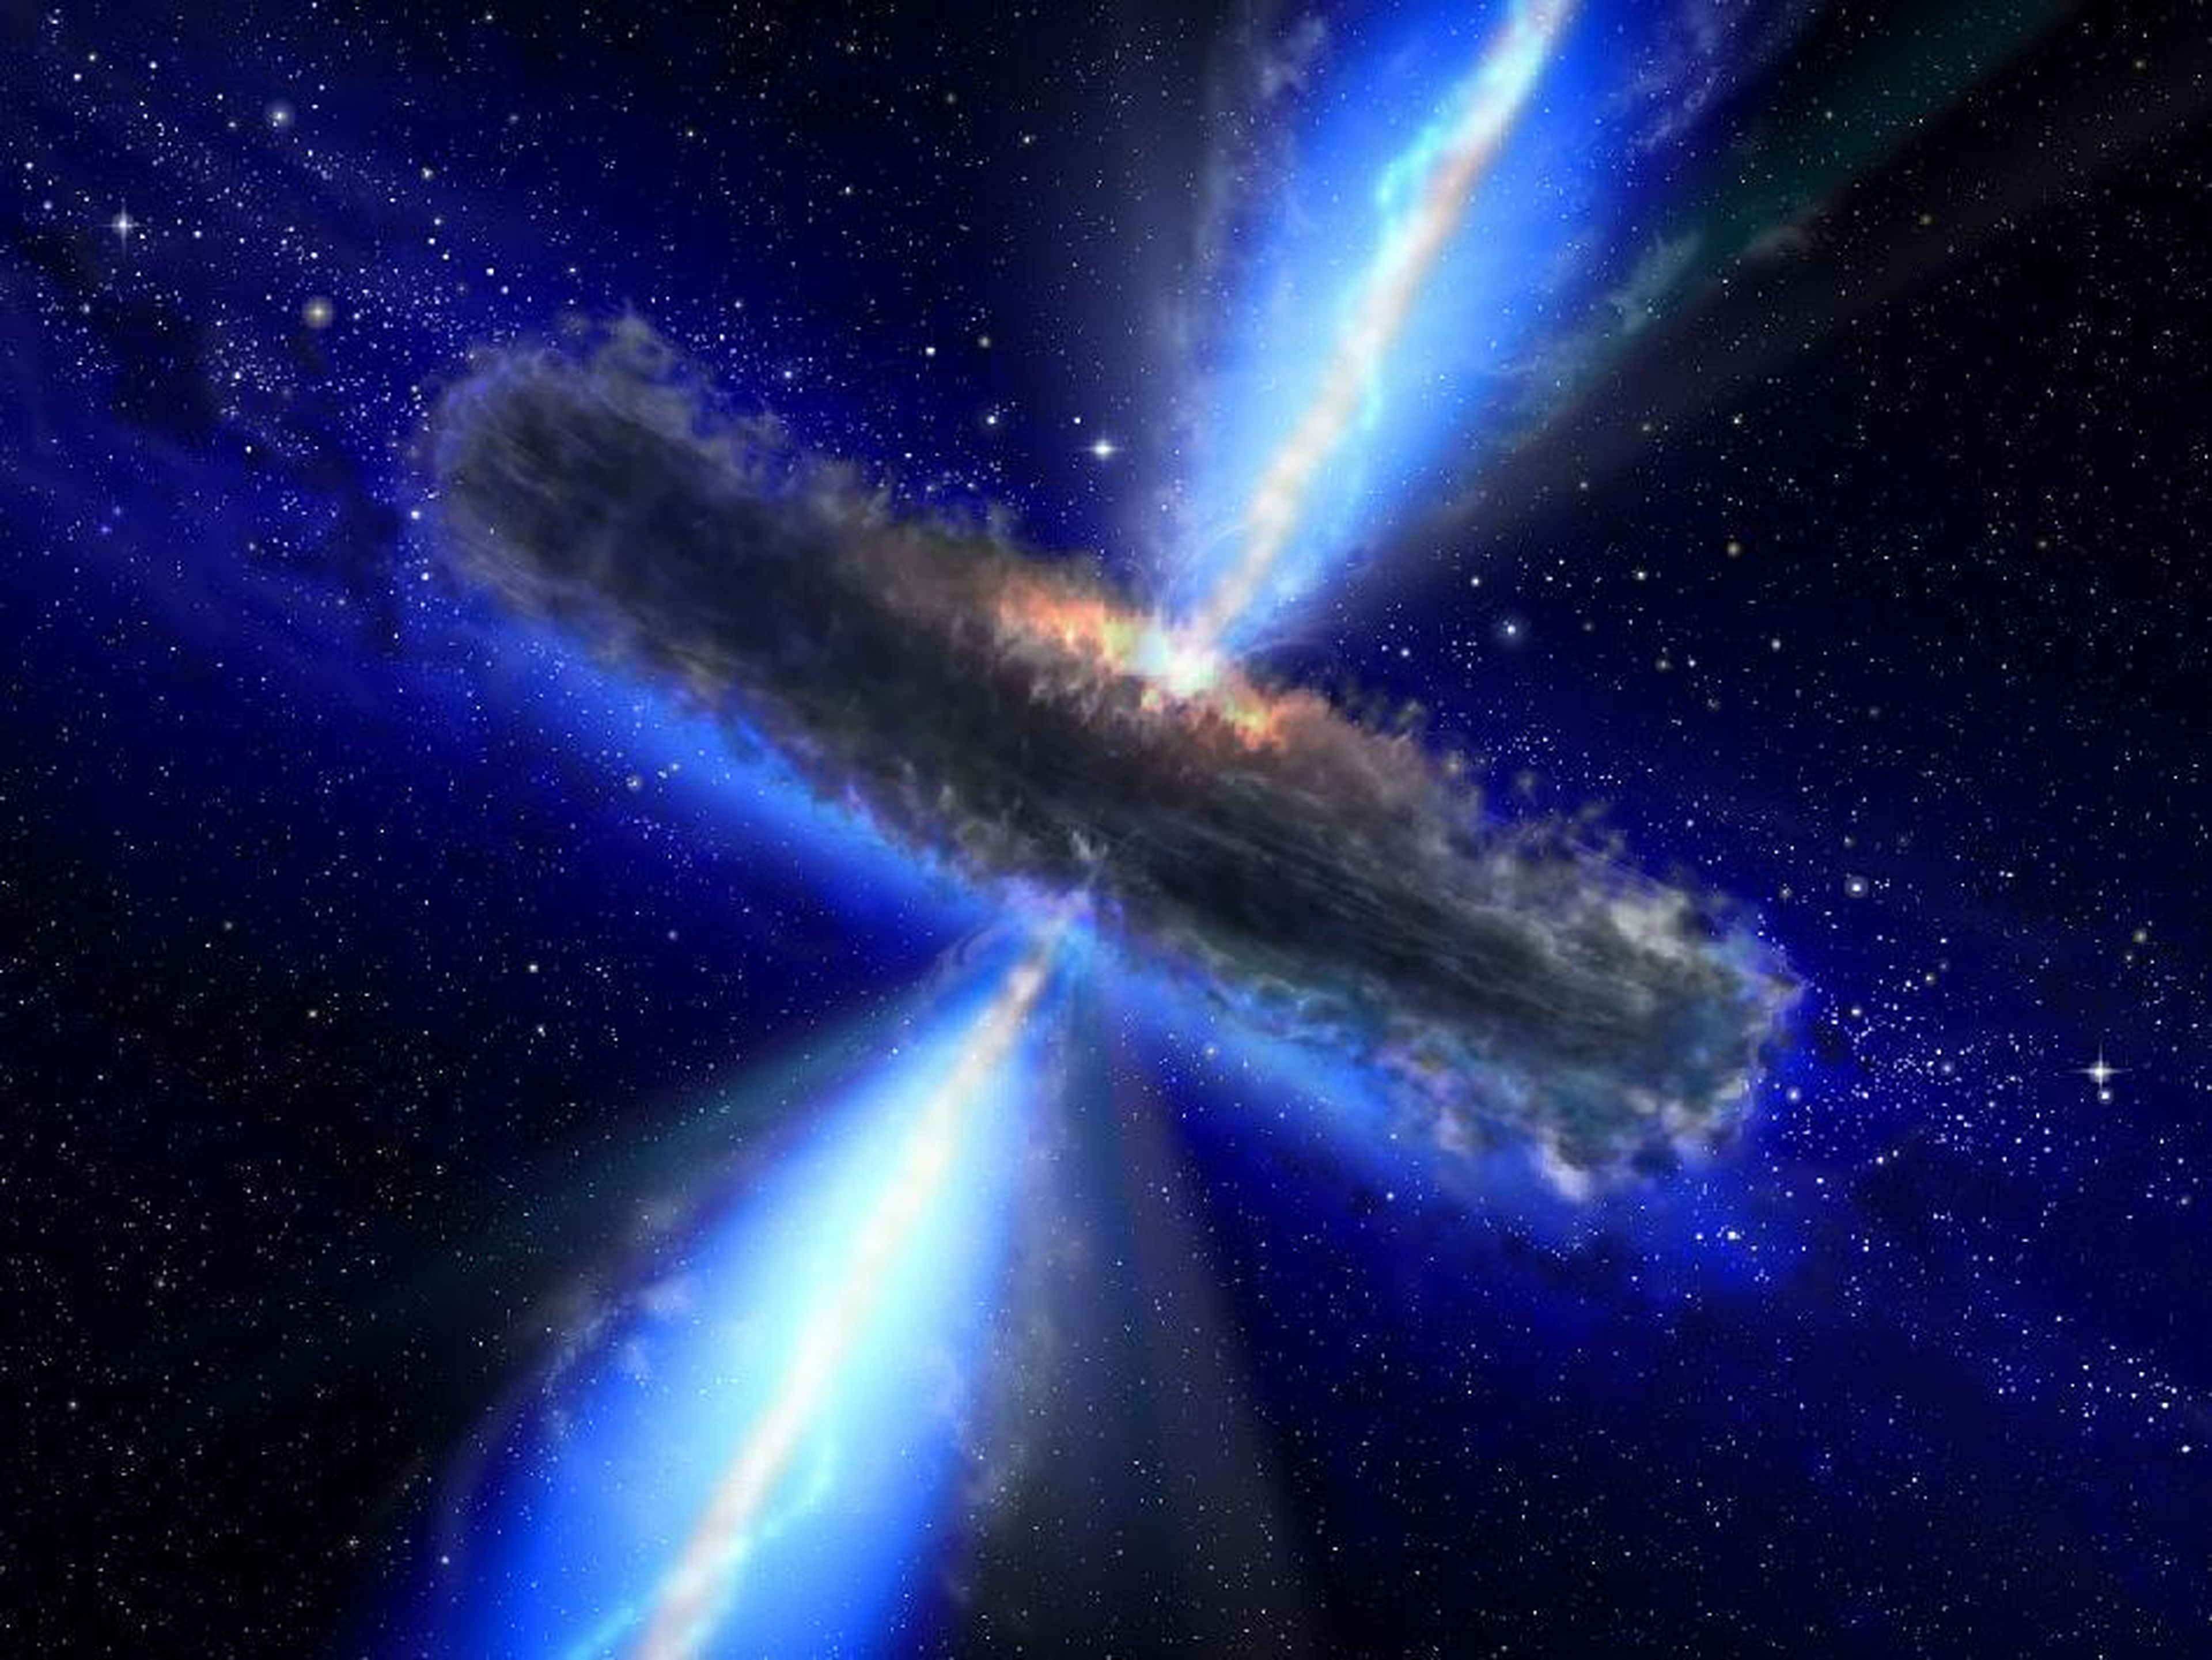 El concepto de este artista ilustra uncuásar, o agujero negro de alimentación, similar a APM 08279 + 5255, donde los astrónomos descubrieron enormes cantidades de vapor de agua.